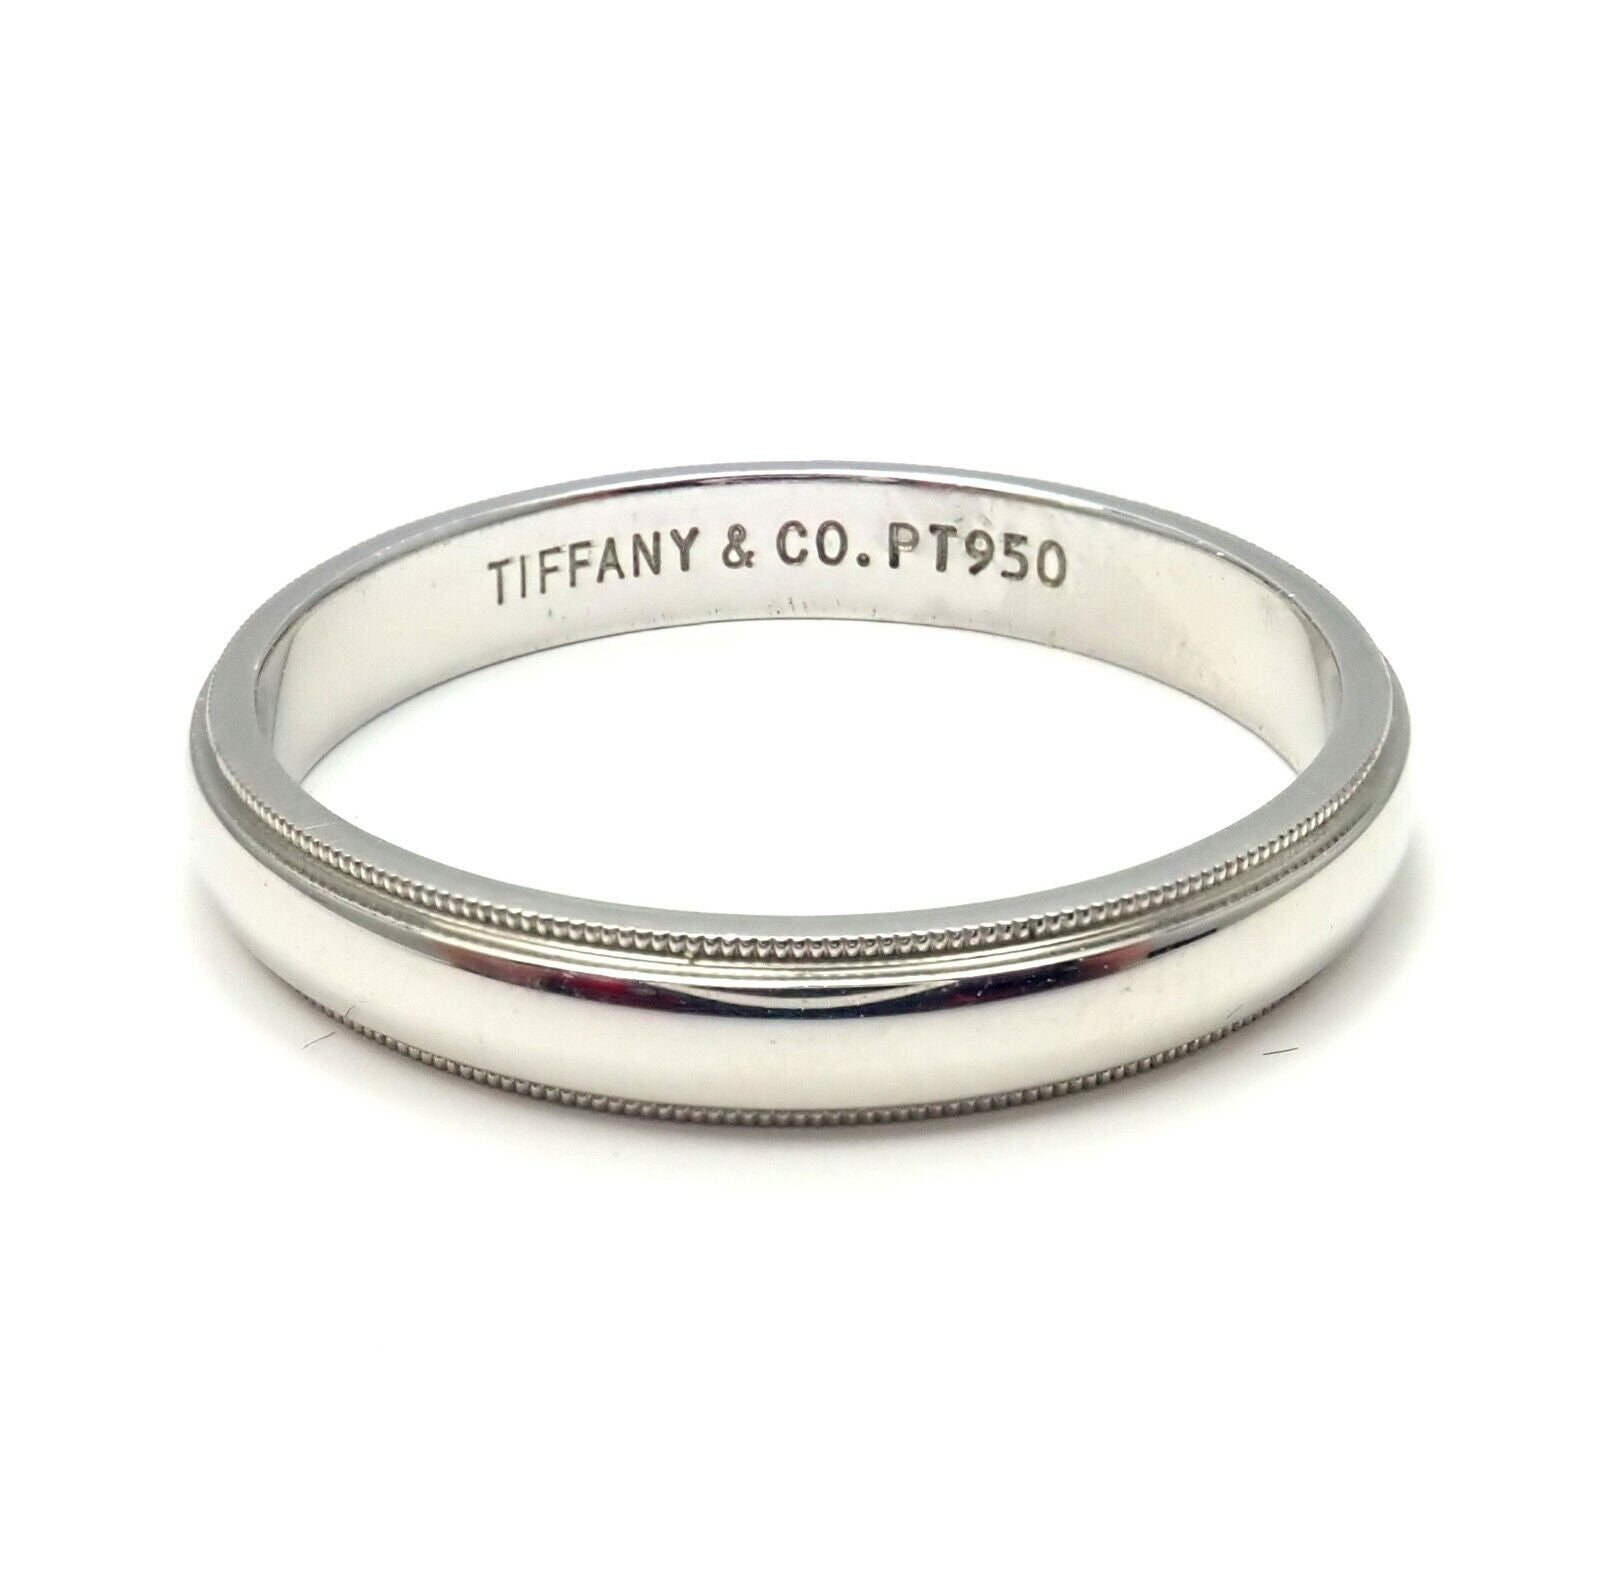 Tiffany & Co. Tiffany & Co. Platinum 4mm Mens Wedding Band Ring Size 14.5